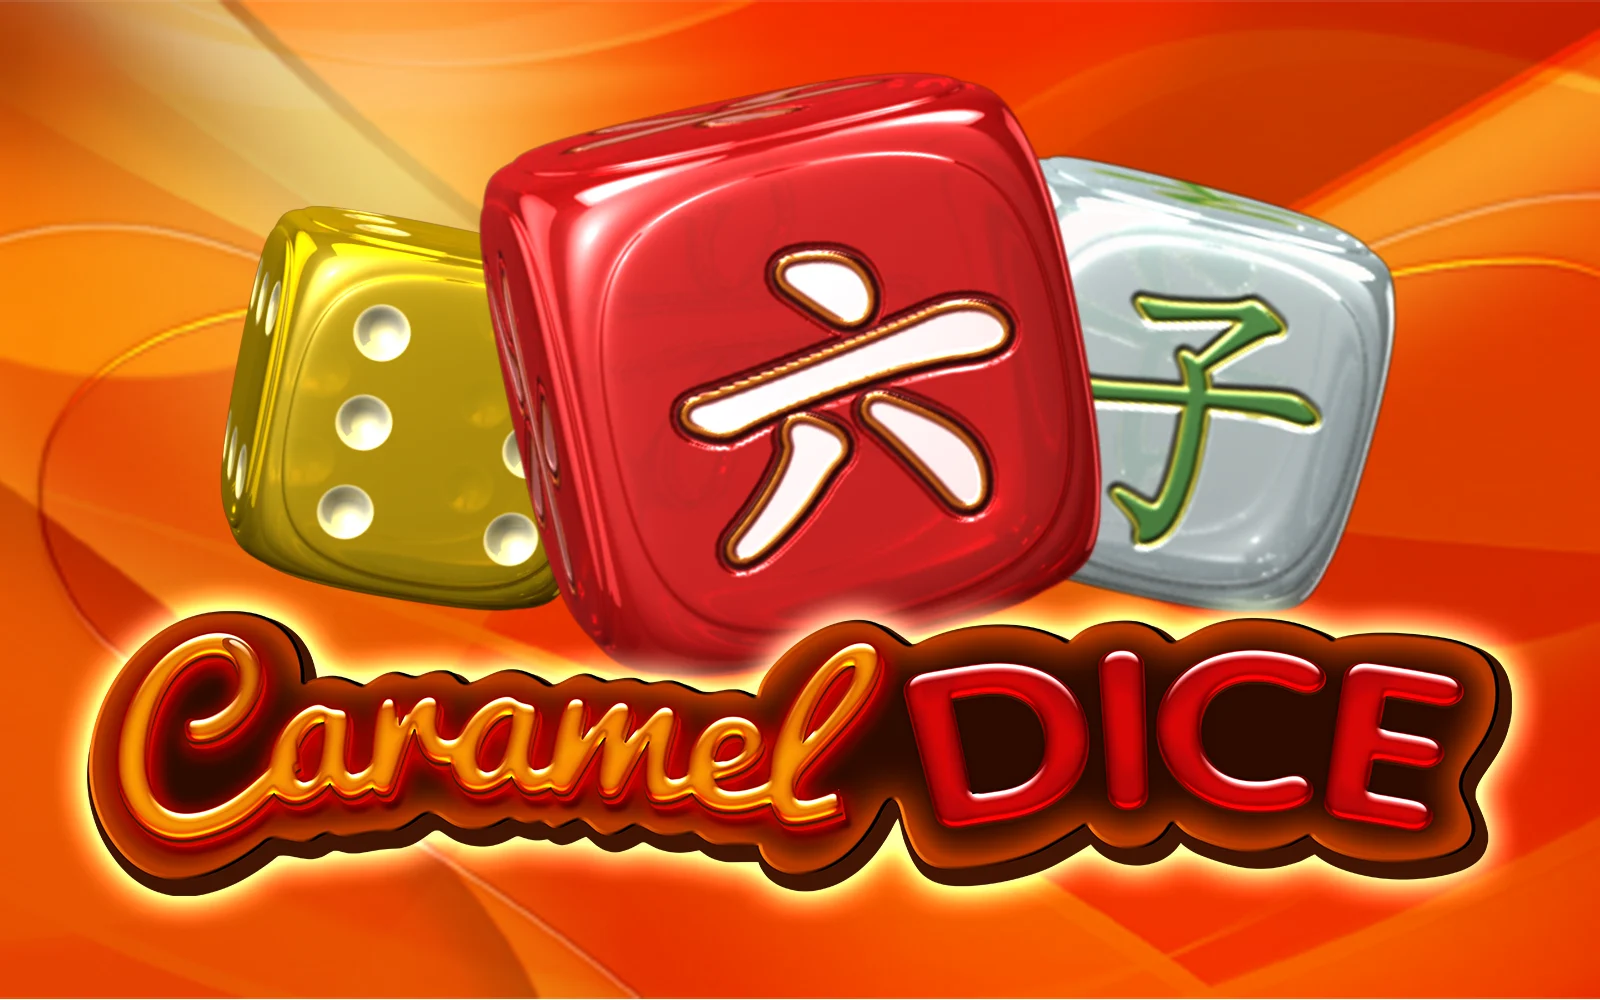 Gioca a Caramel Dice sul casino online Starcasino.be